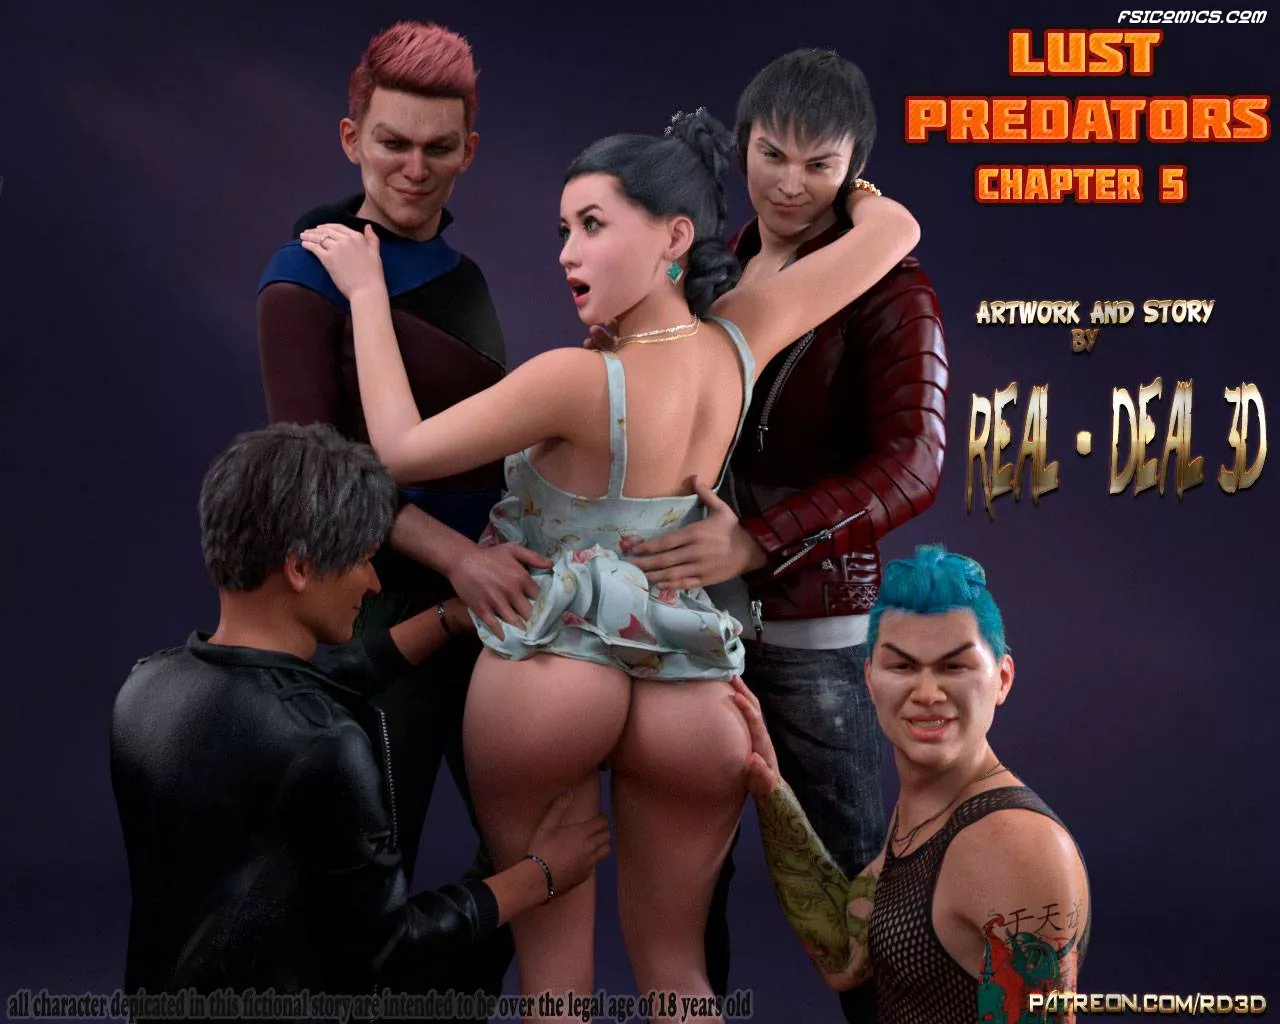 Lust Predators Chapter 5 - Real Deal 3D - 247 - FSIComics